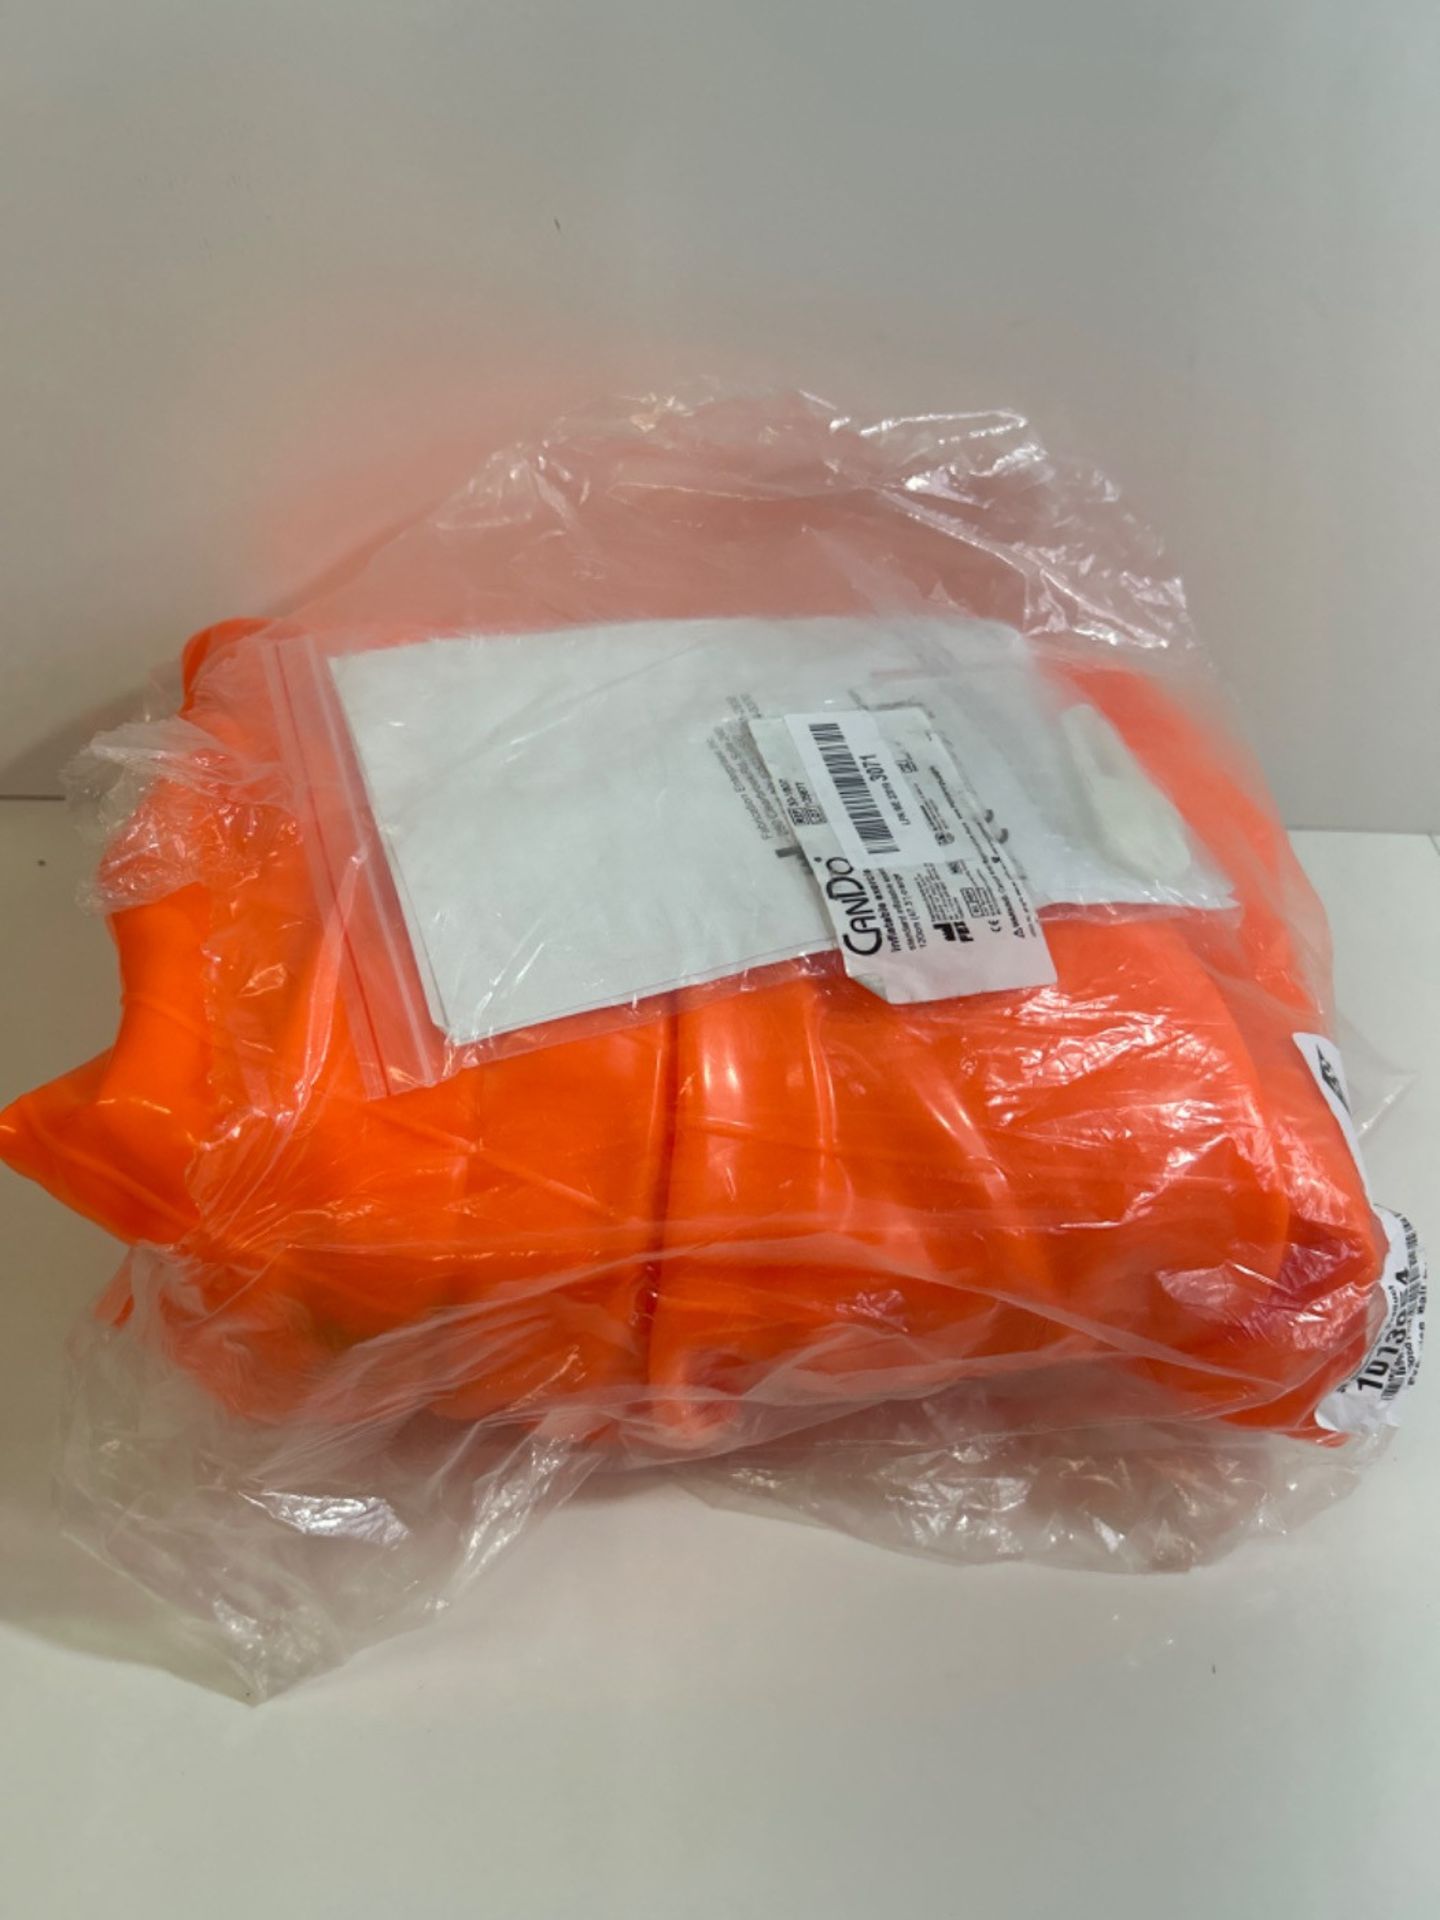 CanDo Exercise Ball, non-slip, inflatable, orange, 120cm - Image 2 of 2